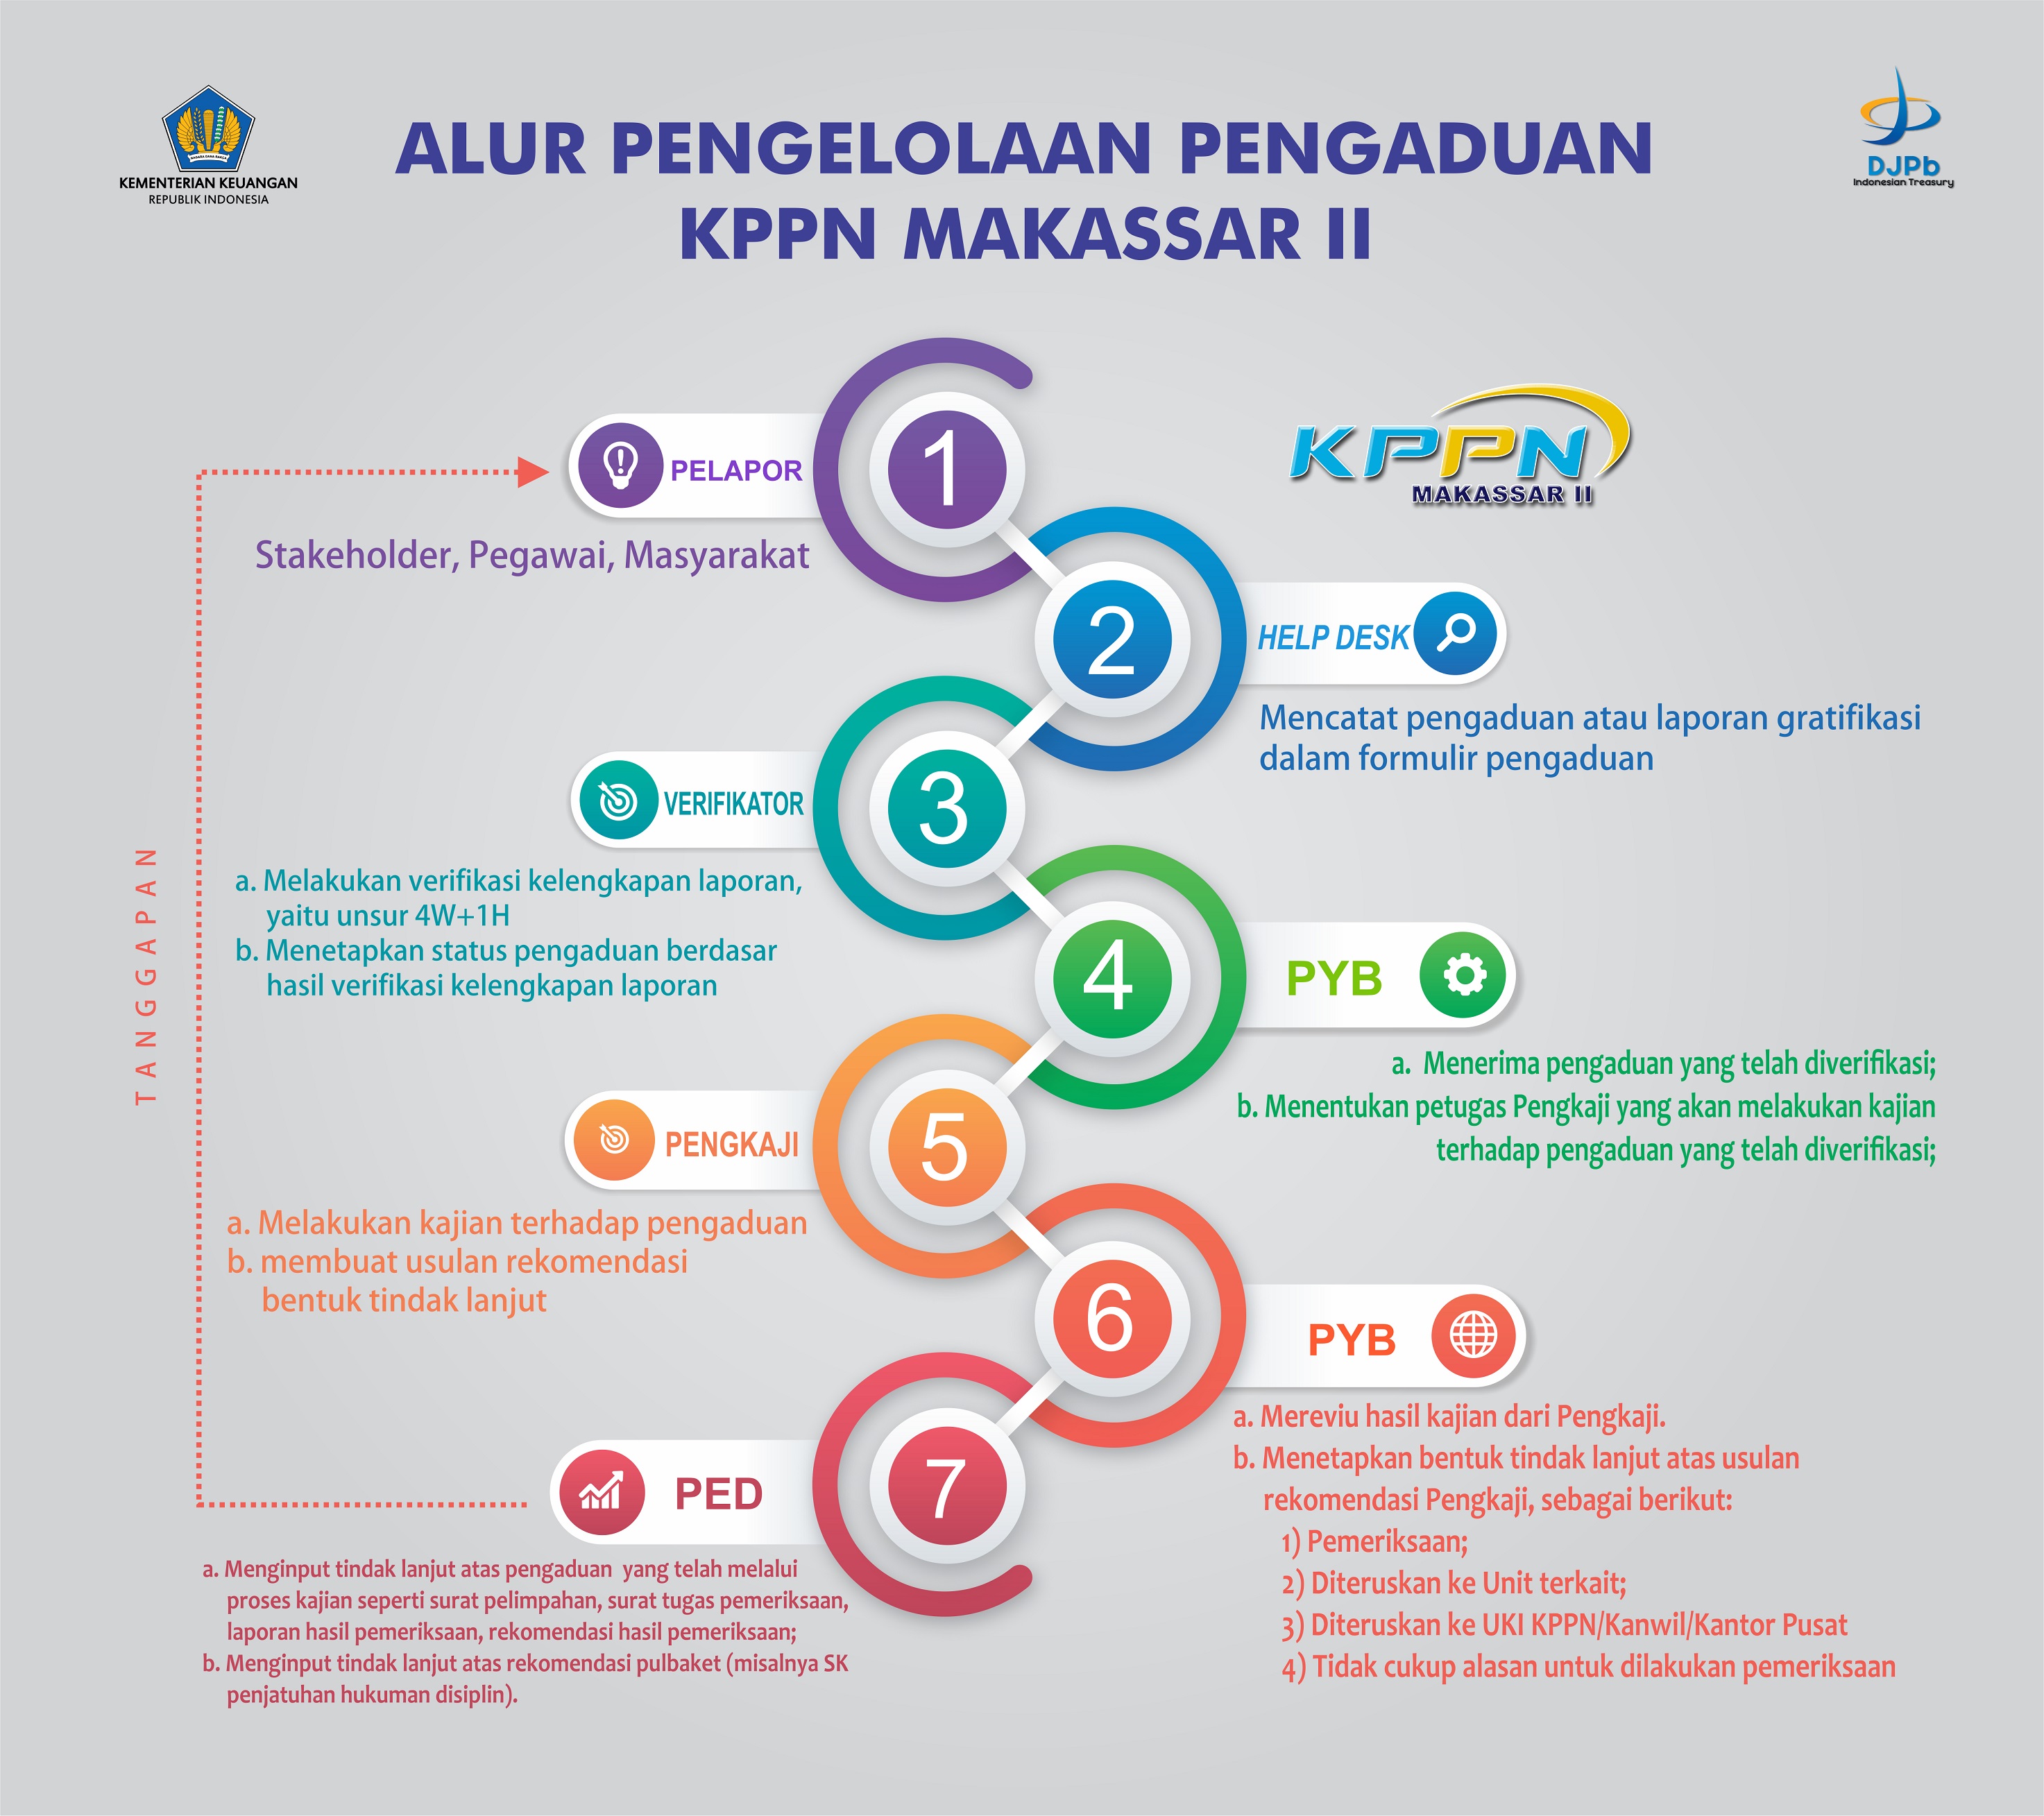 Alur Pengelolaan pengaduan KPPN Makassar II